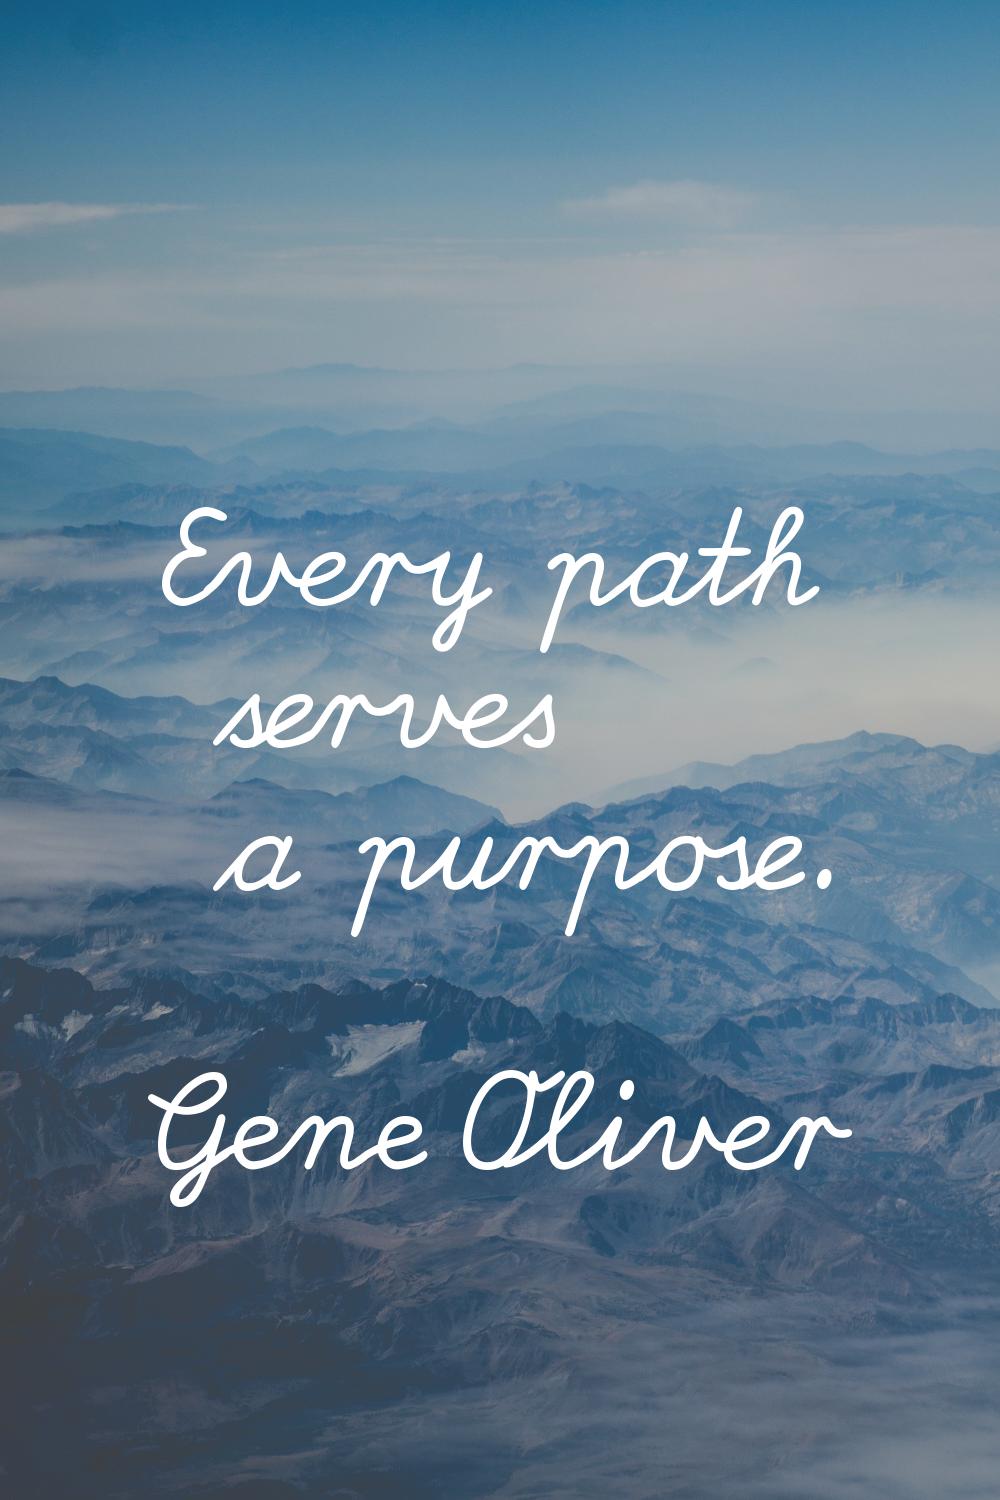 Every path serves a purpose.